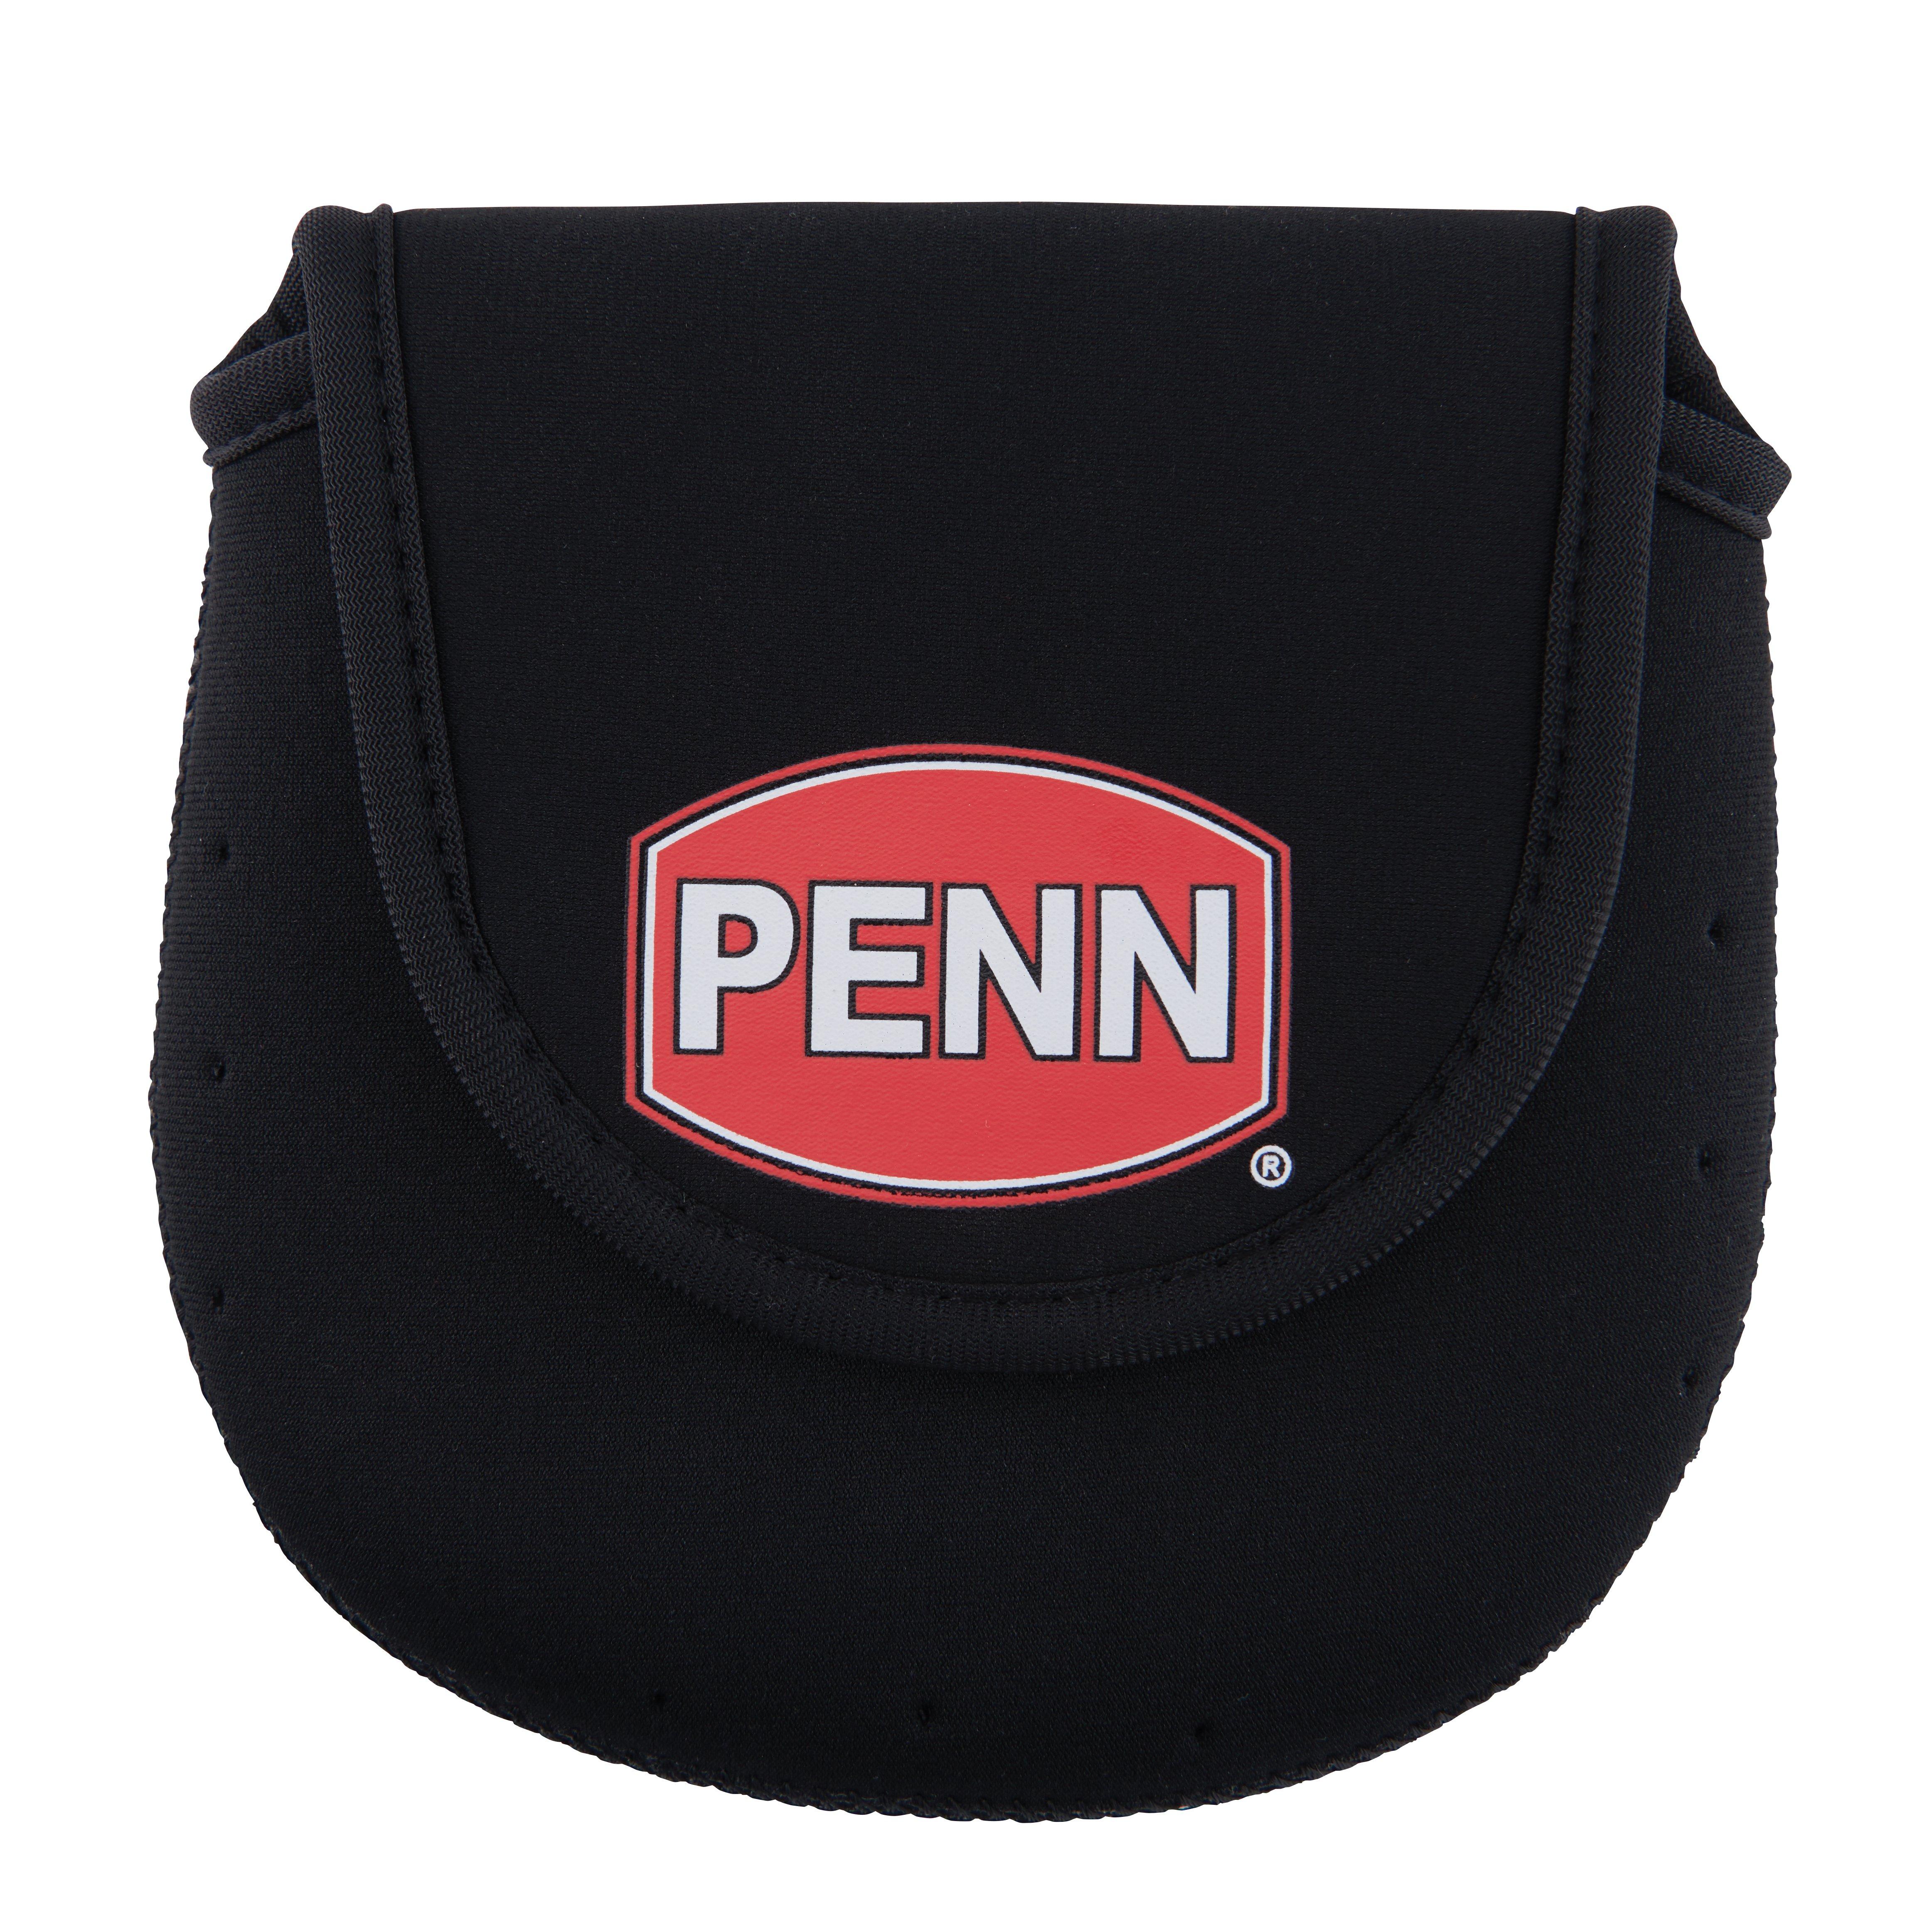 Penn Spinning Reel Covers for sale online 